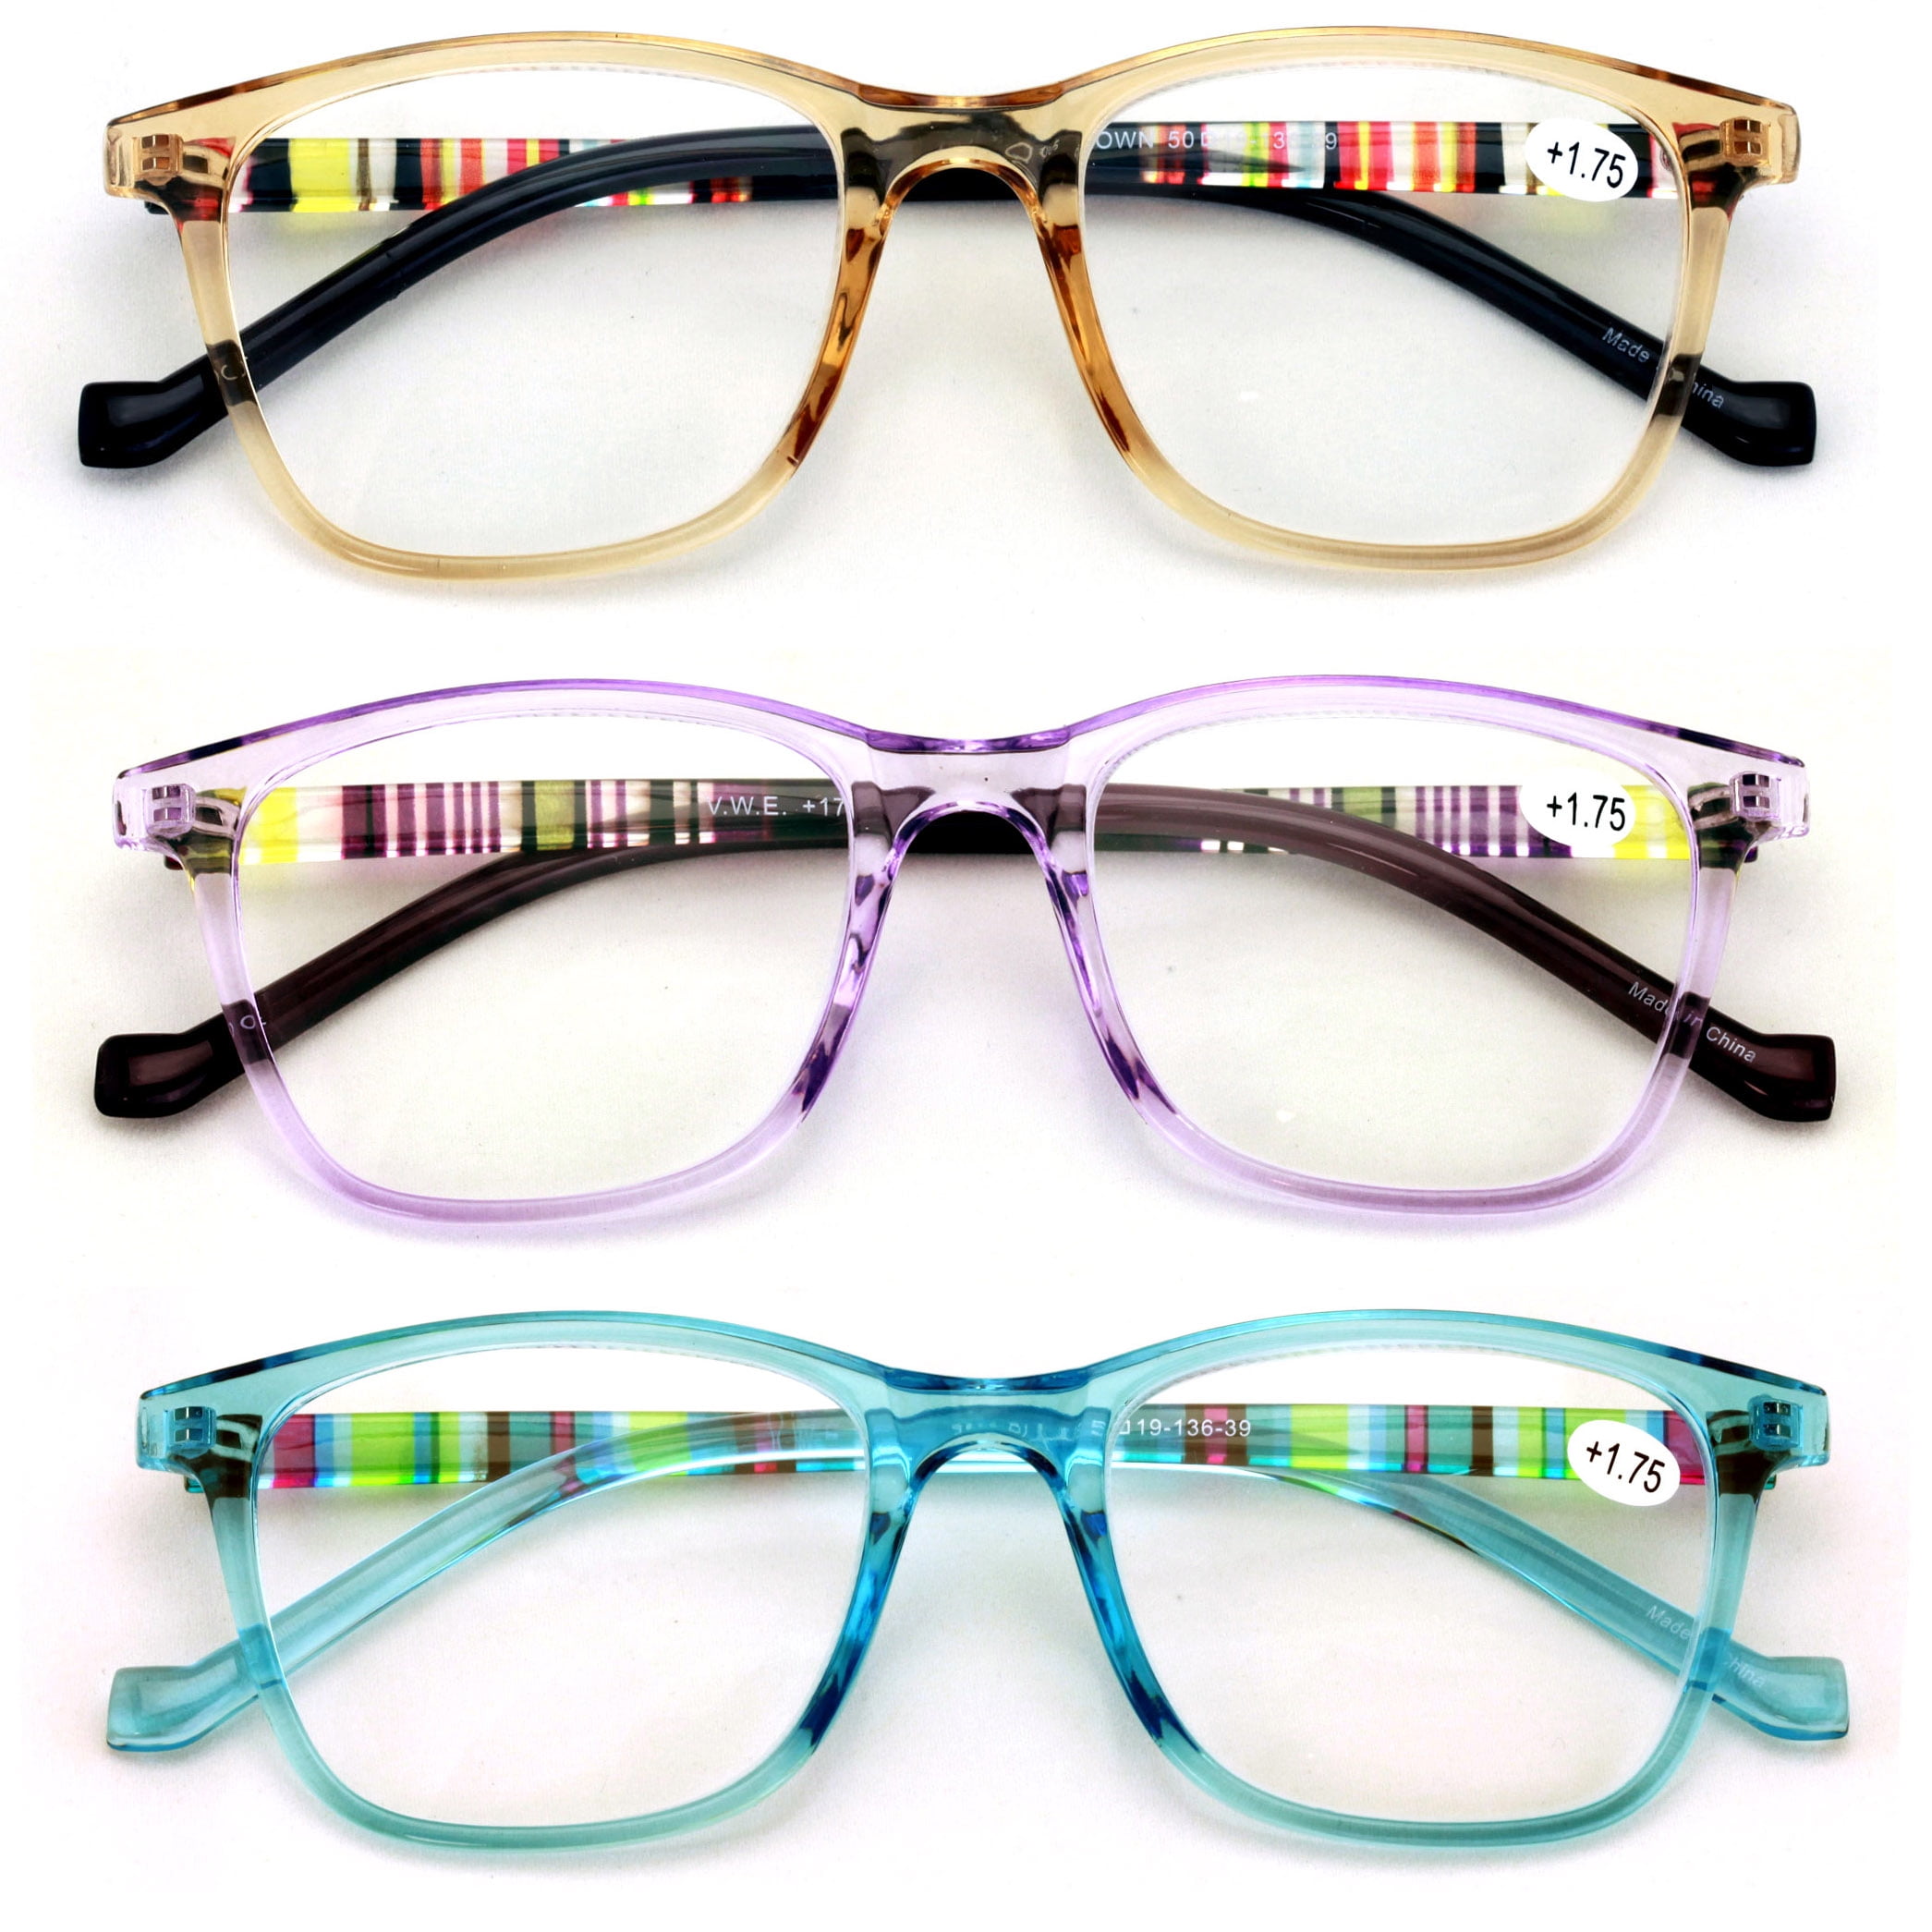 V W E Translucent Plaid Plastic Frame Women S Reading Glasses 3 Pair